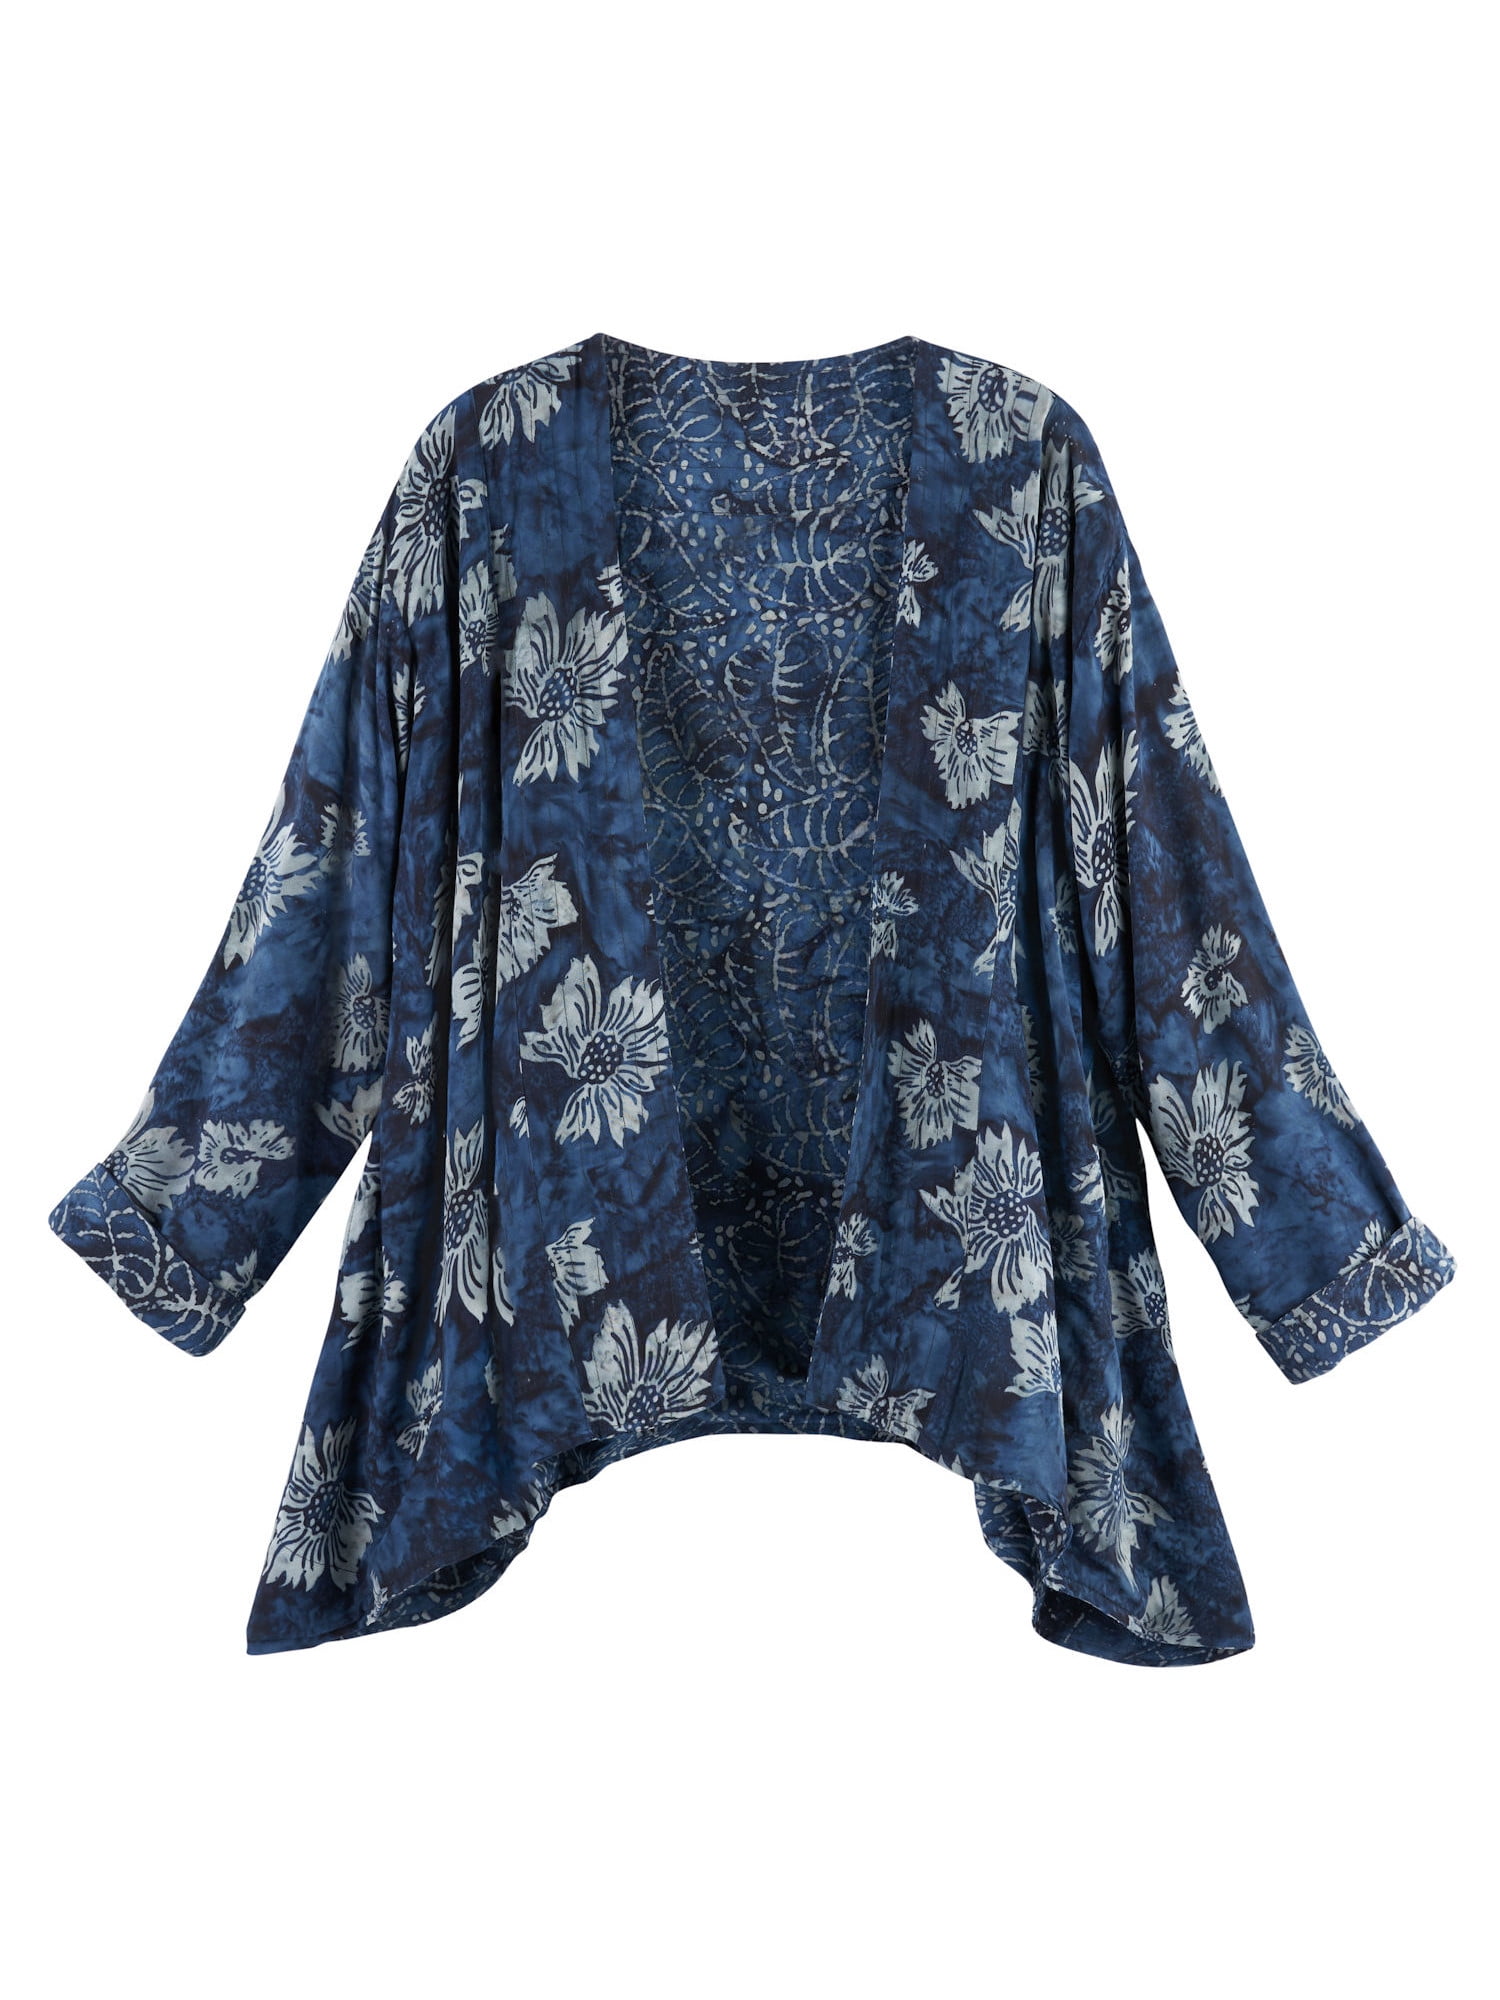 FLORIANA - Women's Batik Reversible Jacket - Indigo Blue Flower and ...